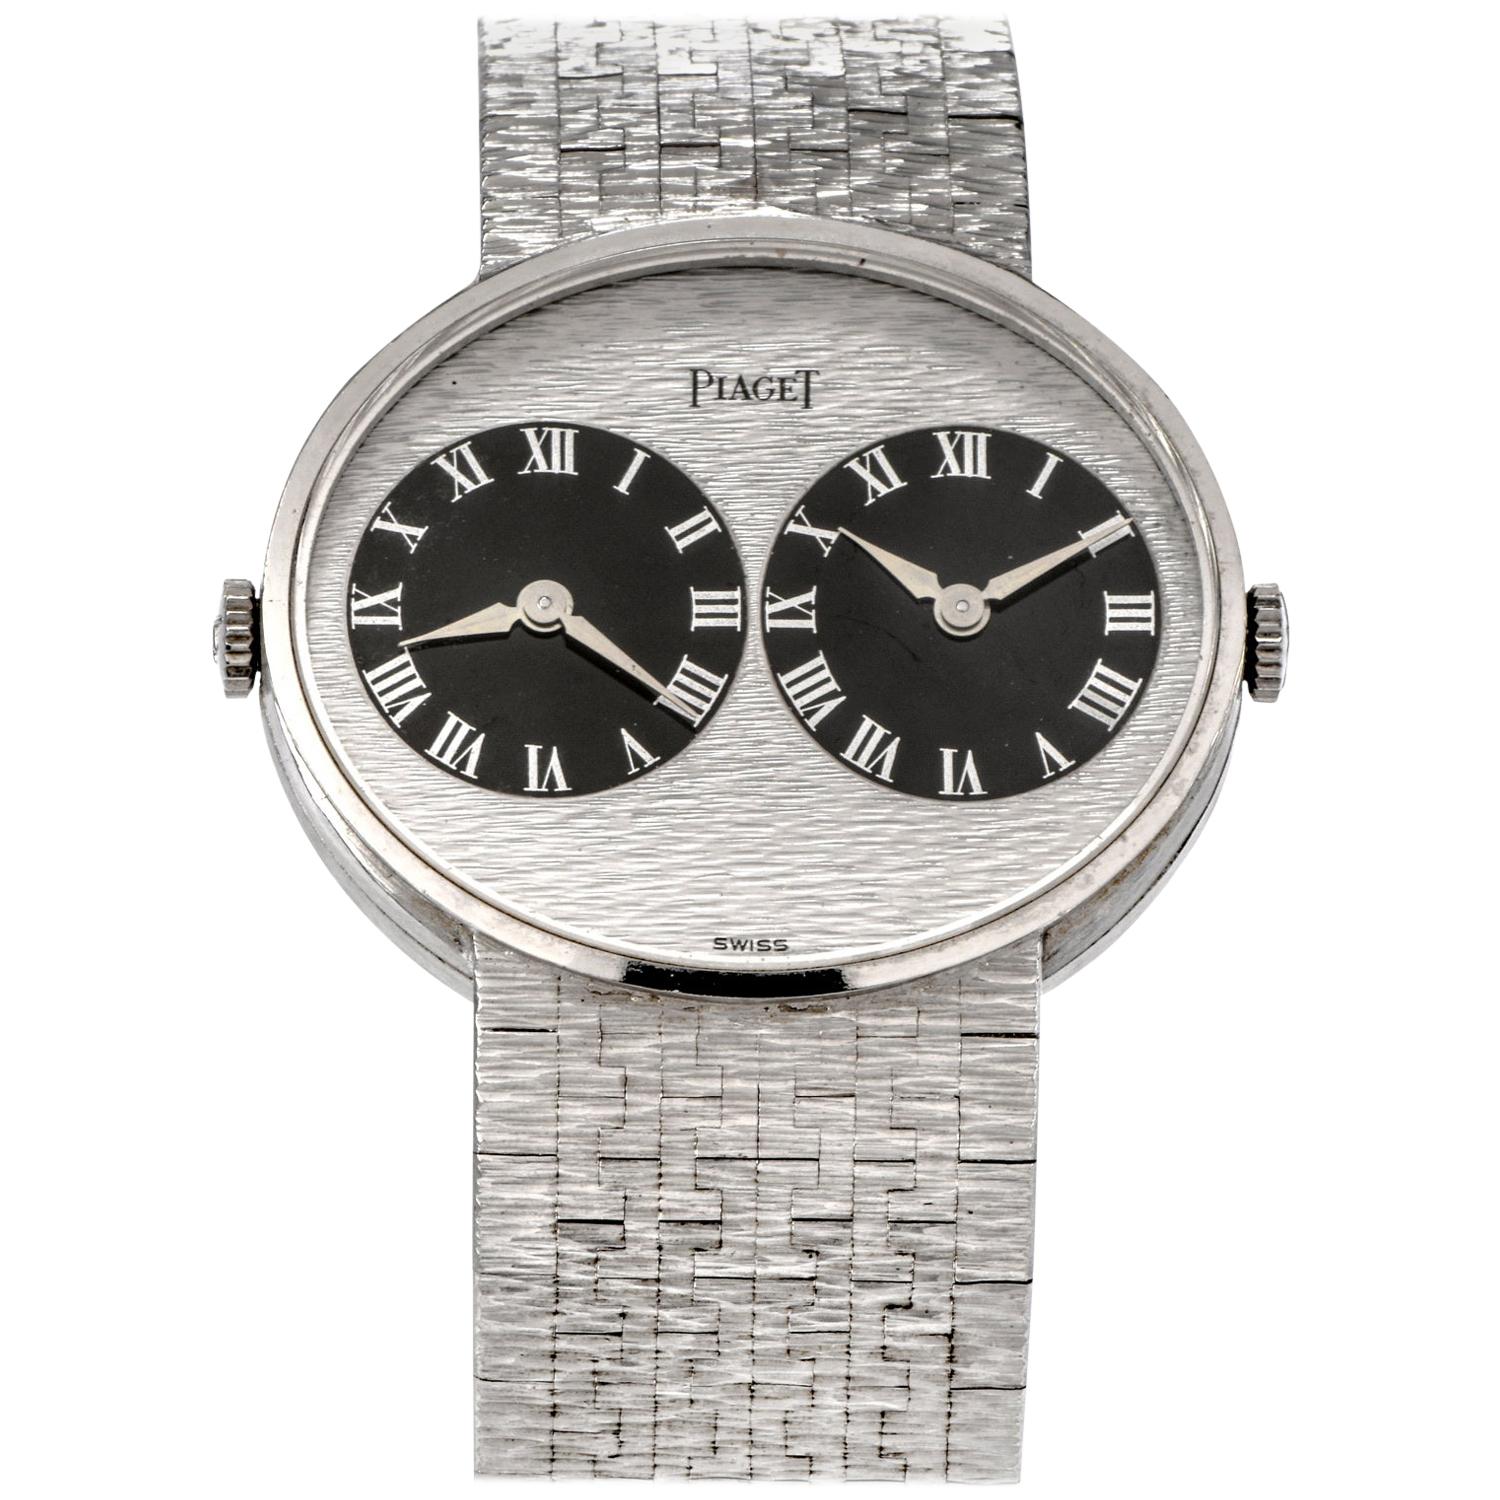 Piaget 612501 A6 Vintage 1970s Two Time Zone 18 Karat White Gold Watch